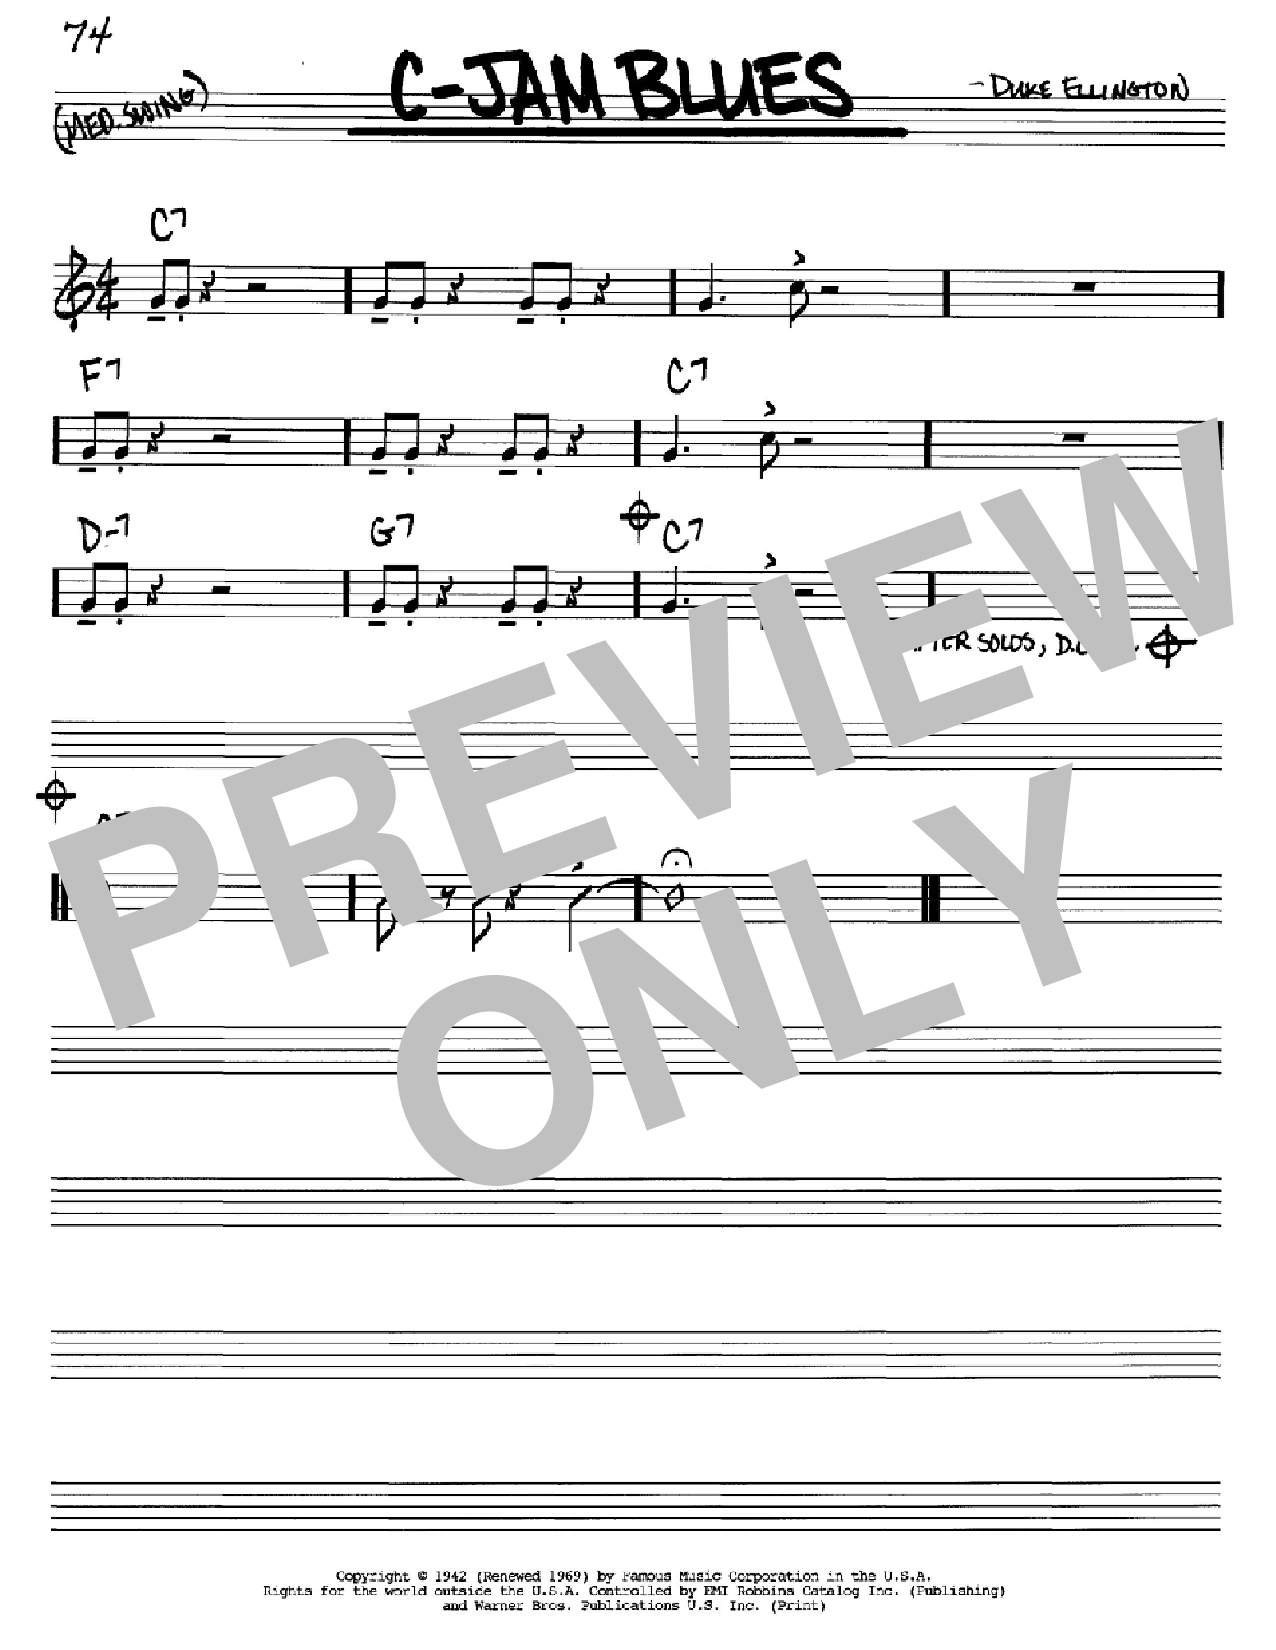 Duke Ellington C-Jam Blues Sheet Music Notes & Chords for Guitar Ensemble - Download or Print PDF